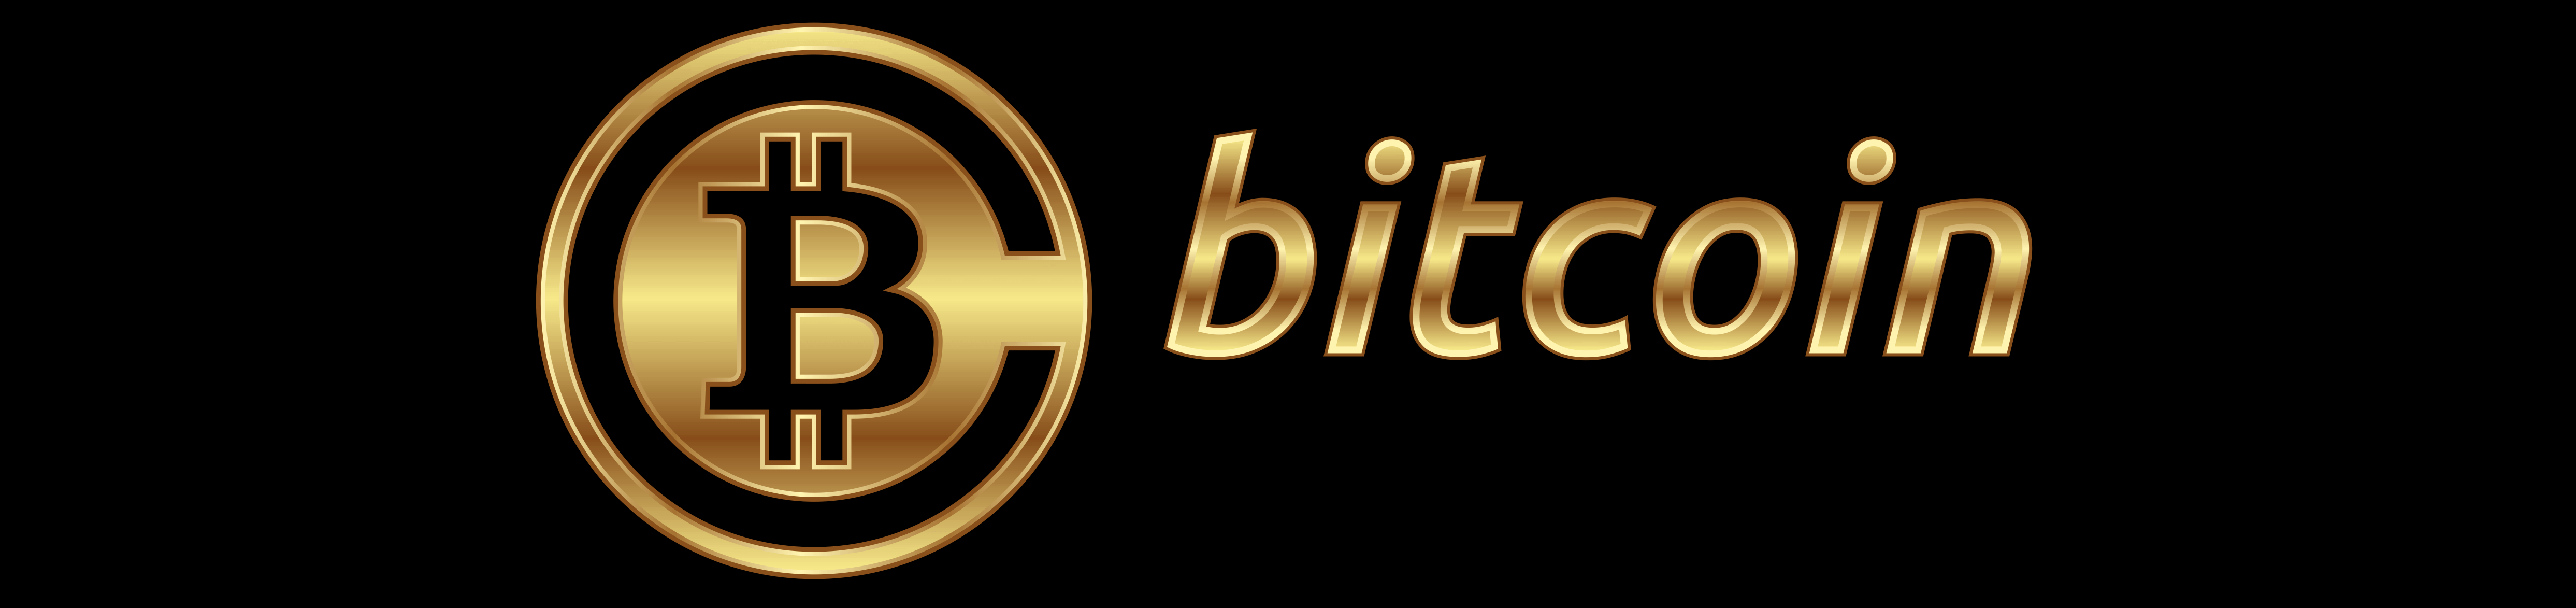 Logo-Bitcoin-BlackBackground1.png